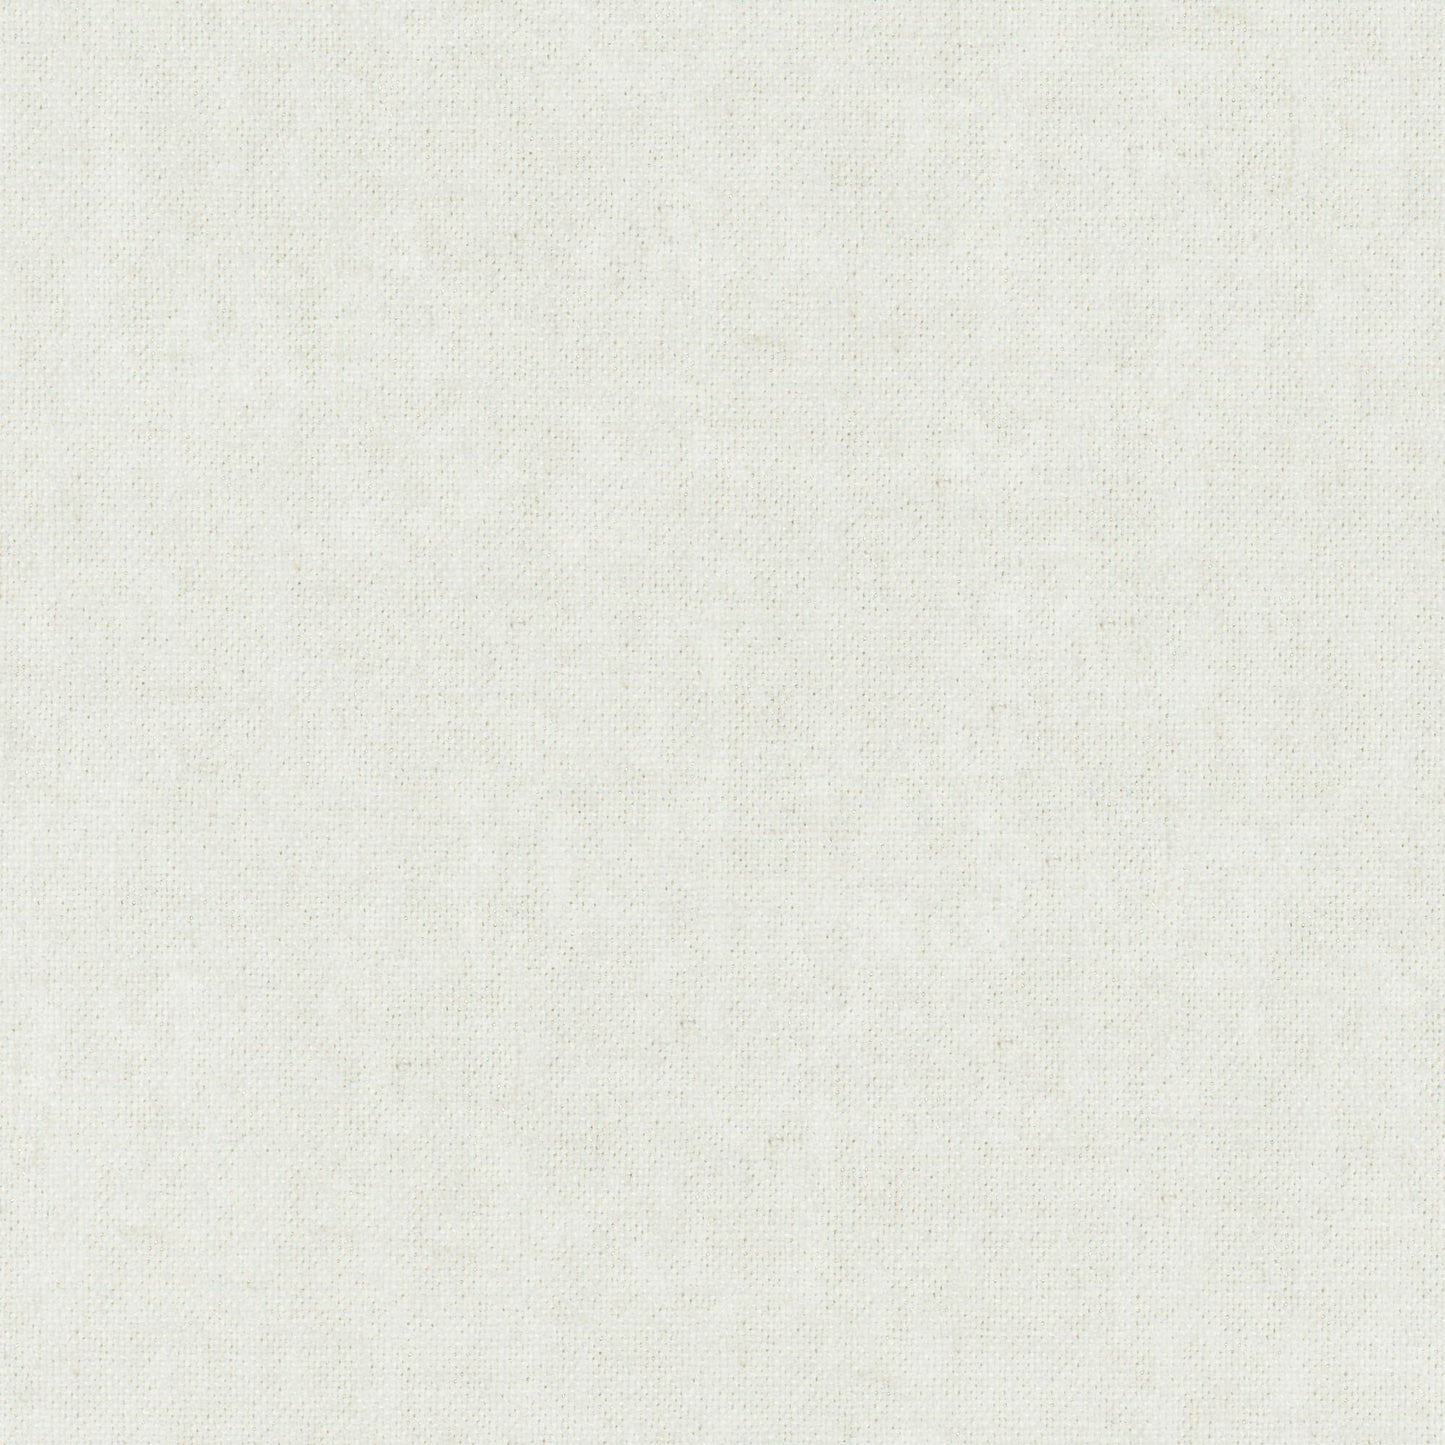 Home Fabrics - FibreGuard - Monterey - 09-Fog - Fabric per Meter